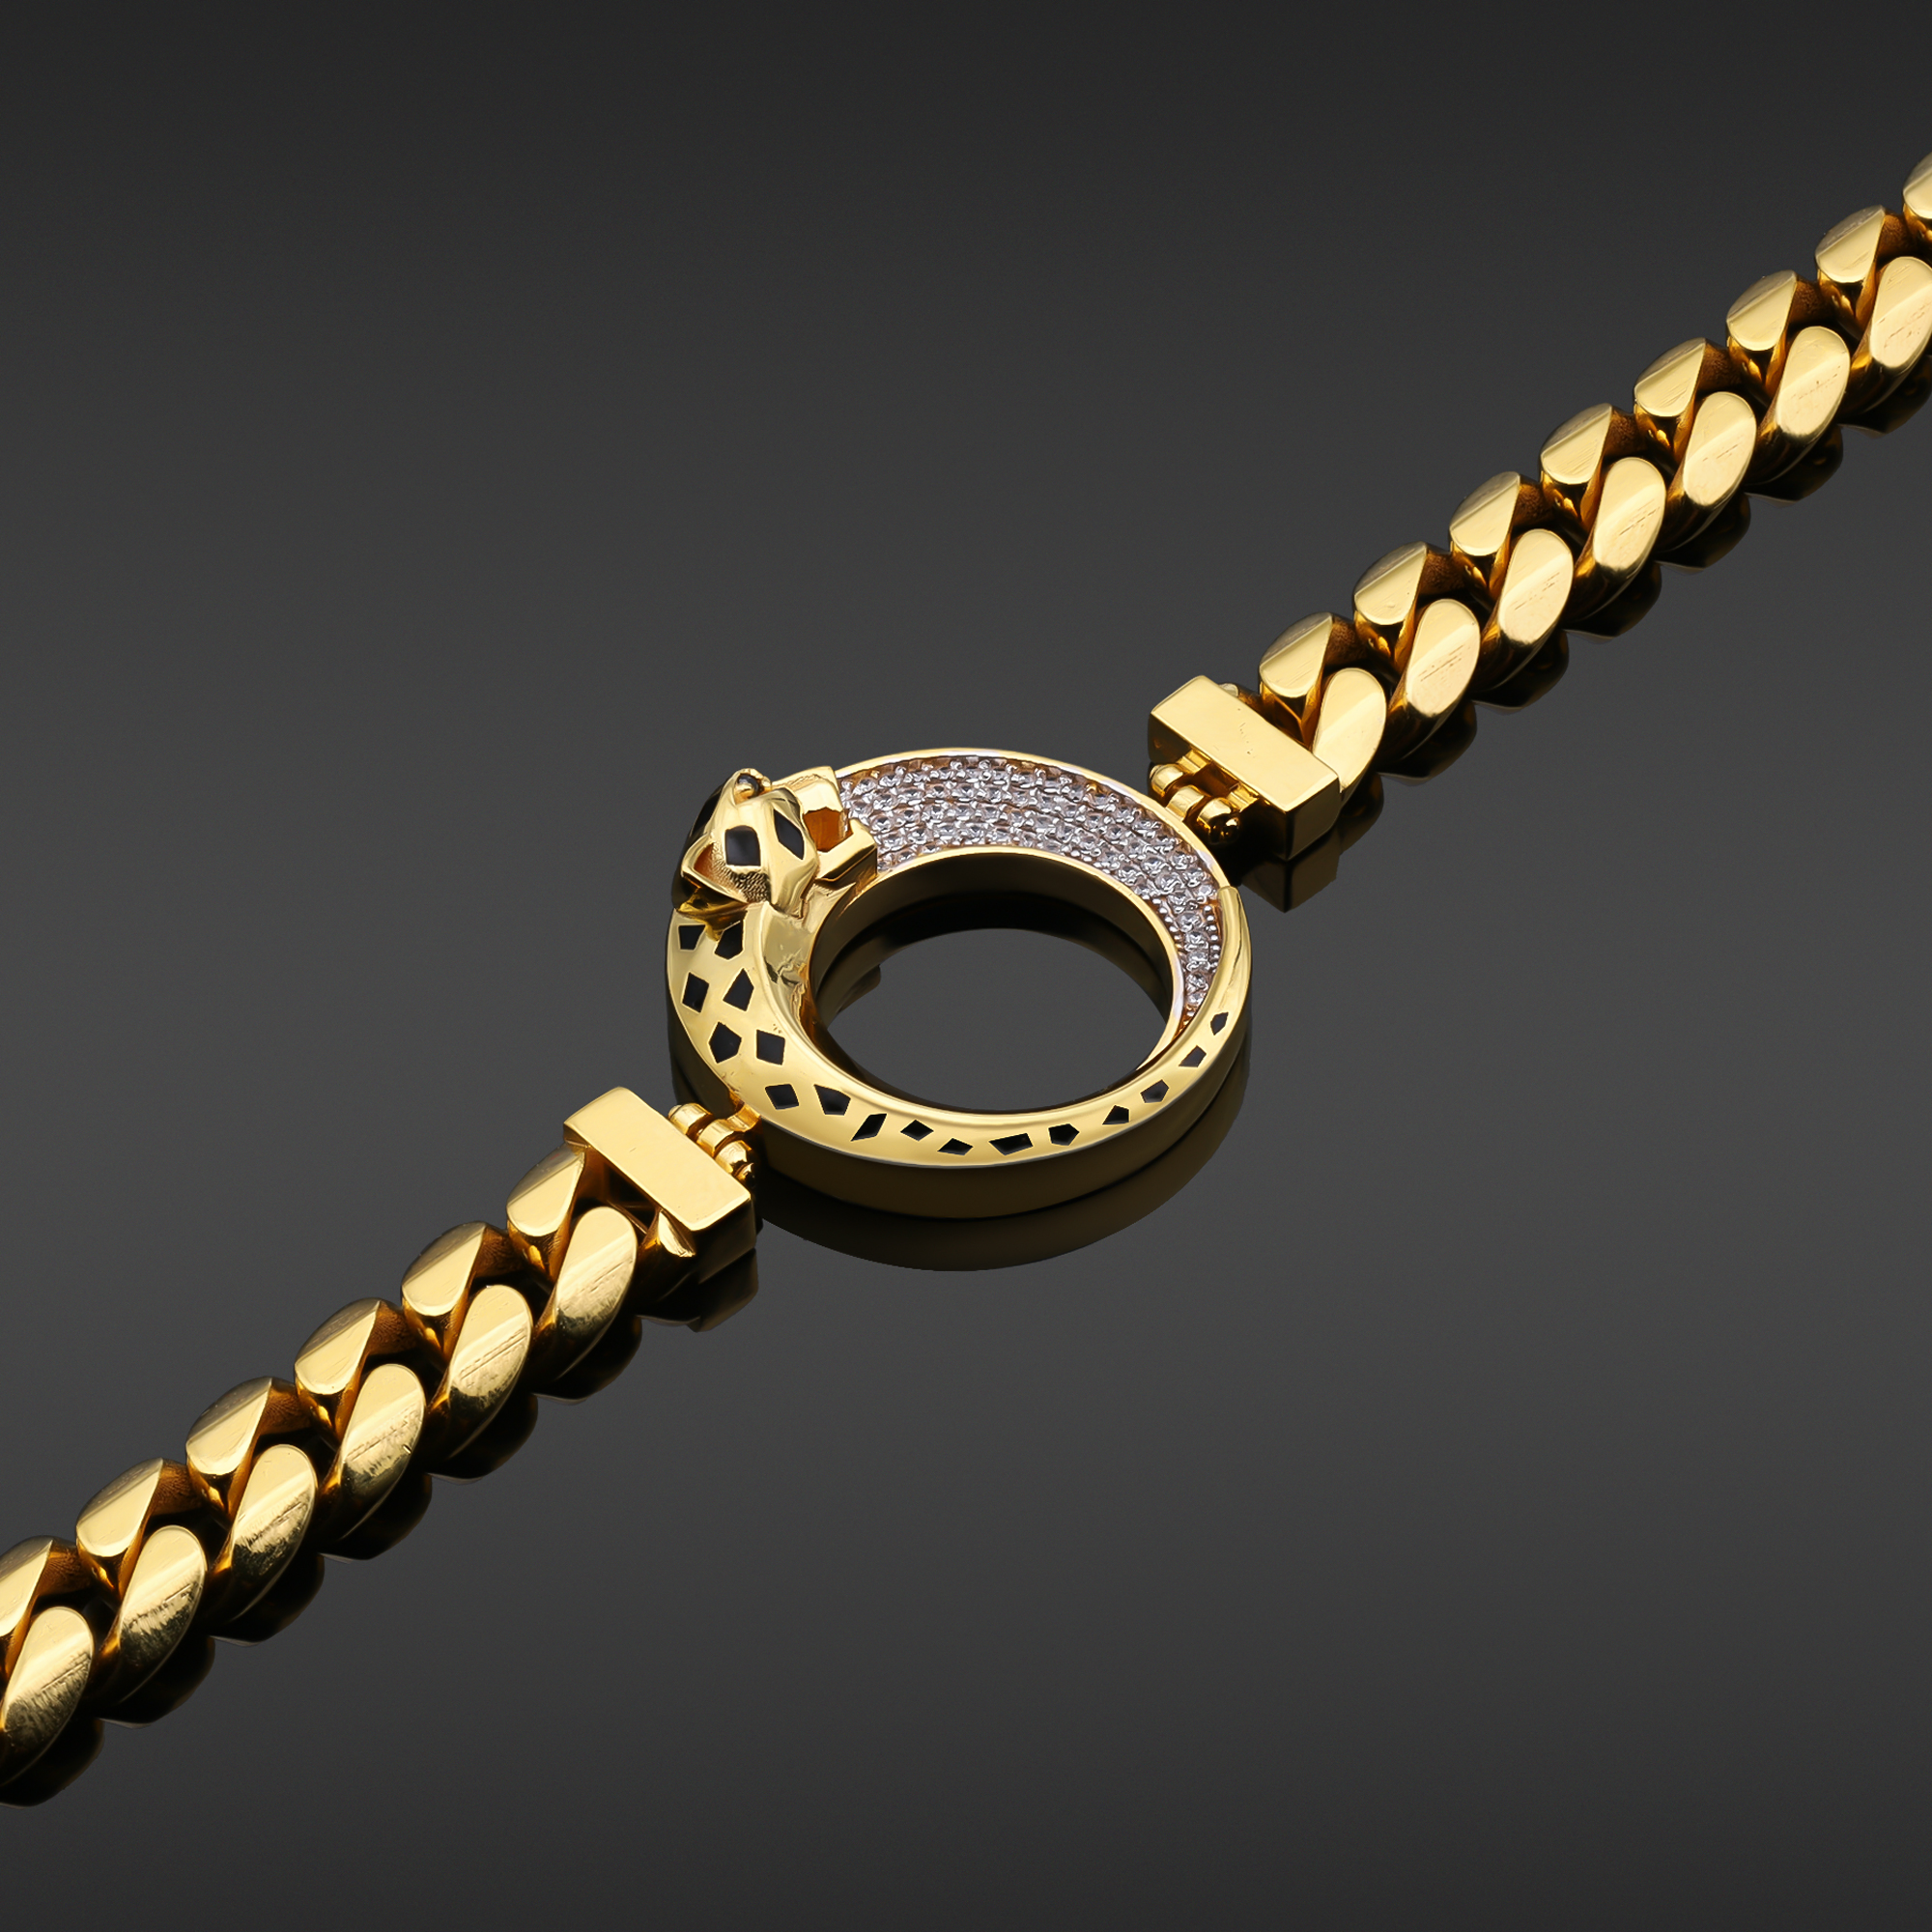 Designer Platinum & Rose Gold Chess Bracelet for Men JL PTB 1082 - Etsy |  Bracelets for men, Mens gold jewelry, Man gold bracelet design